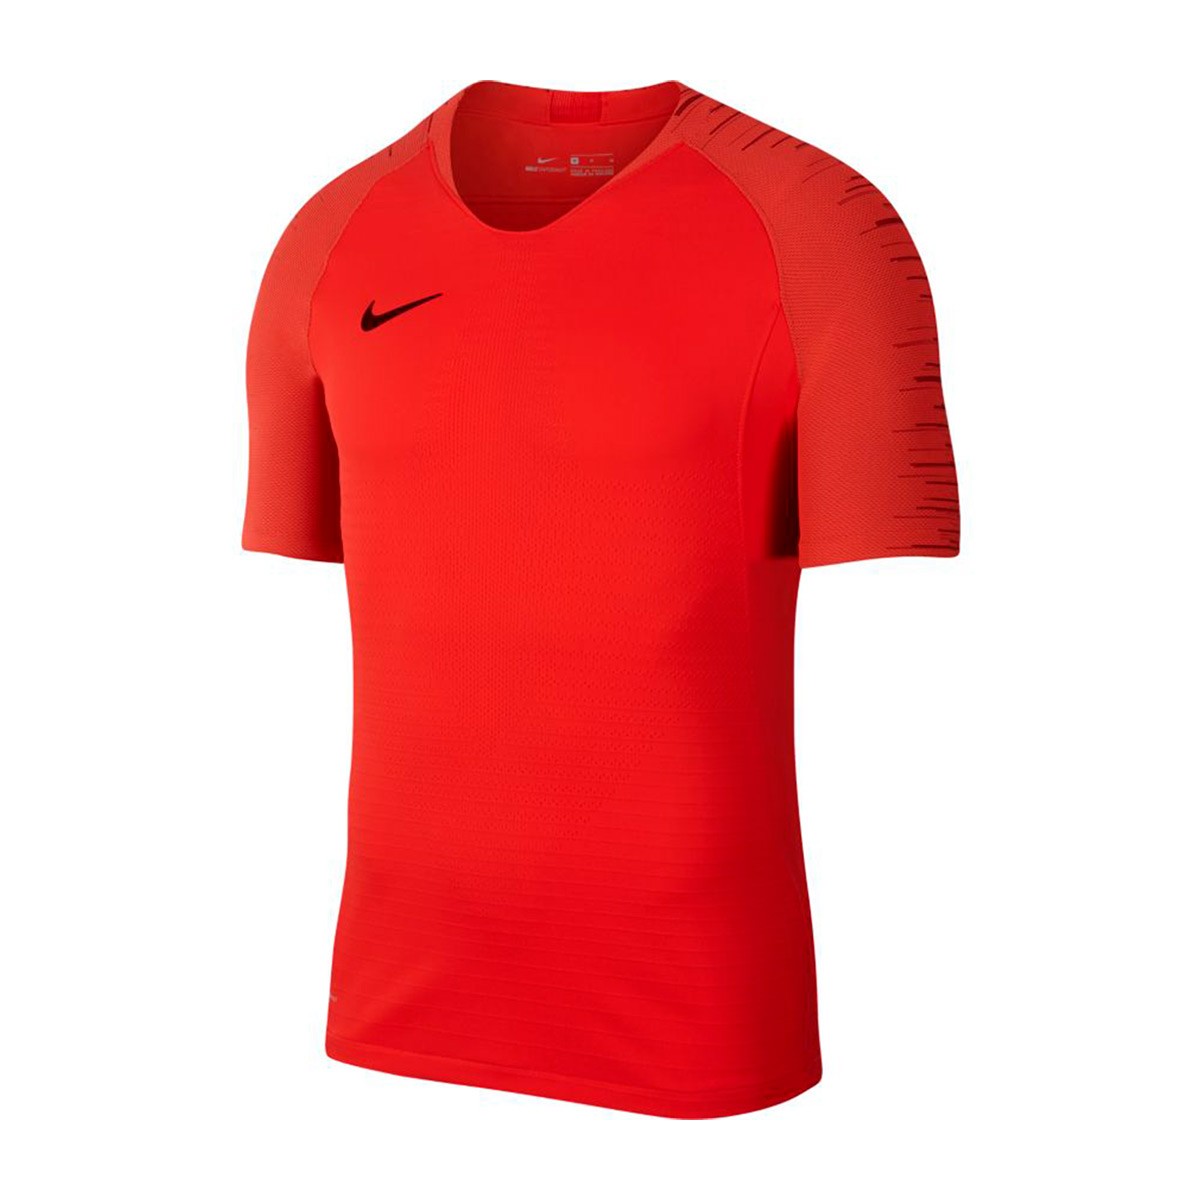 Jersey Nike Kids VaporKnit Strike Light crimson-Team red - Football store  Fútbol Emotion